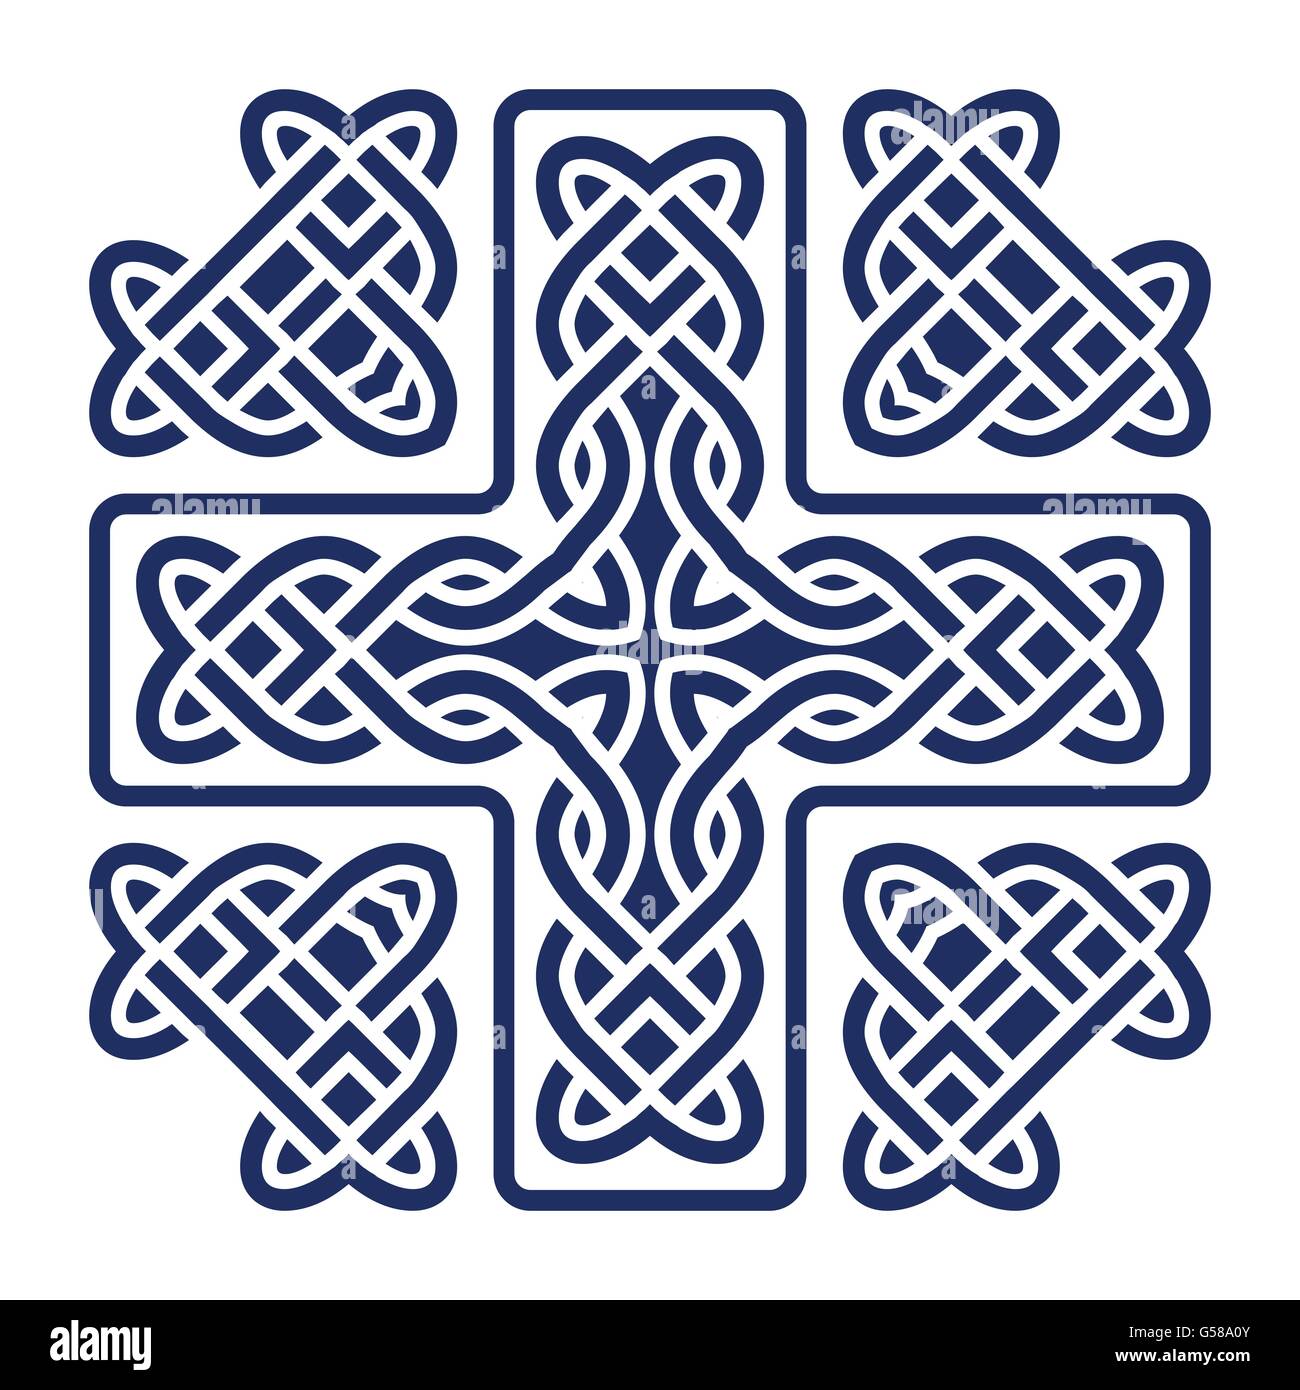 celtic knot cross isolated on white vector illustration Stock Vector